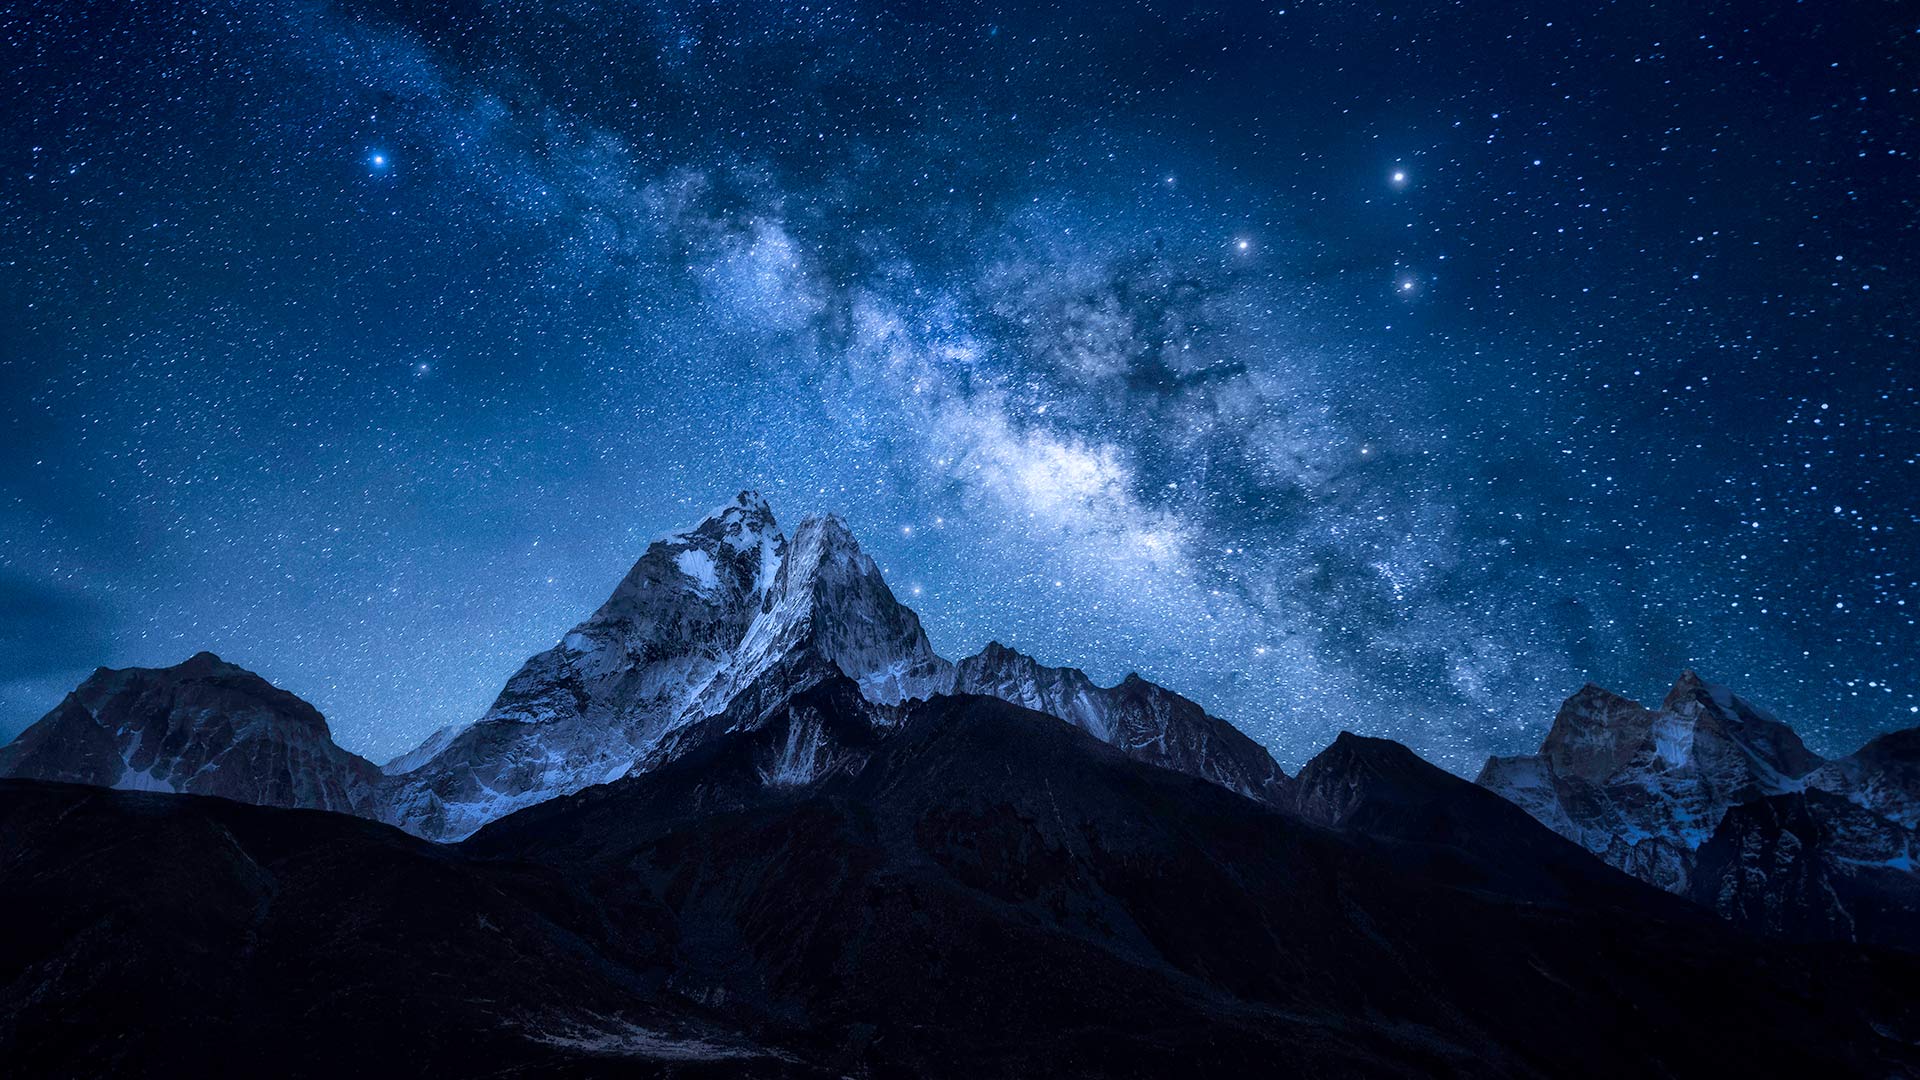 Nepal Mountain Wallpapers - Top Free Nepal Mountain Backgrounds ...